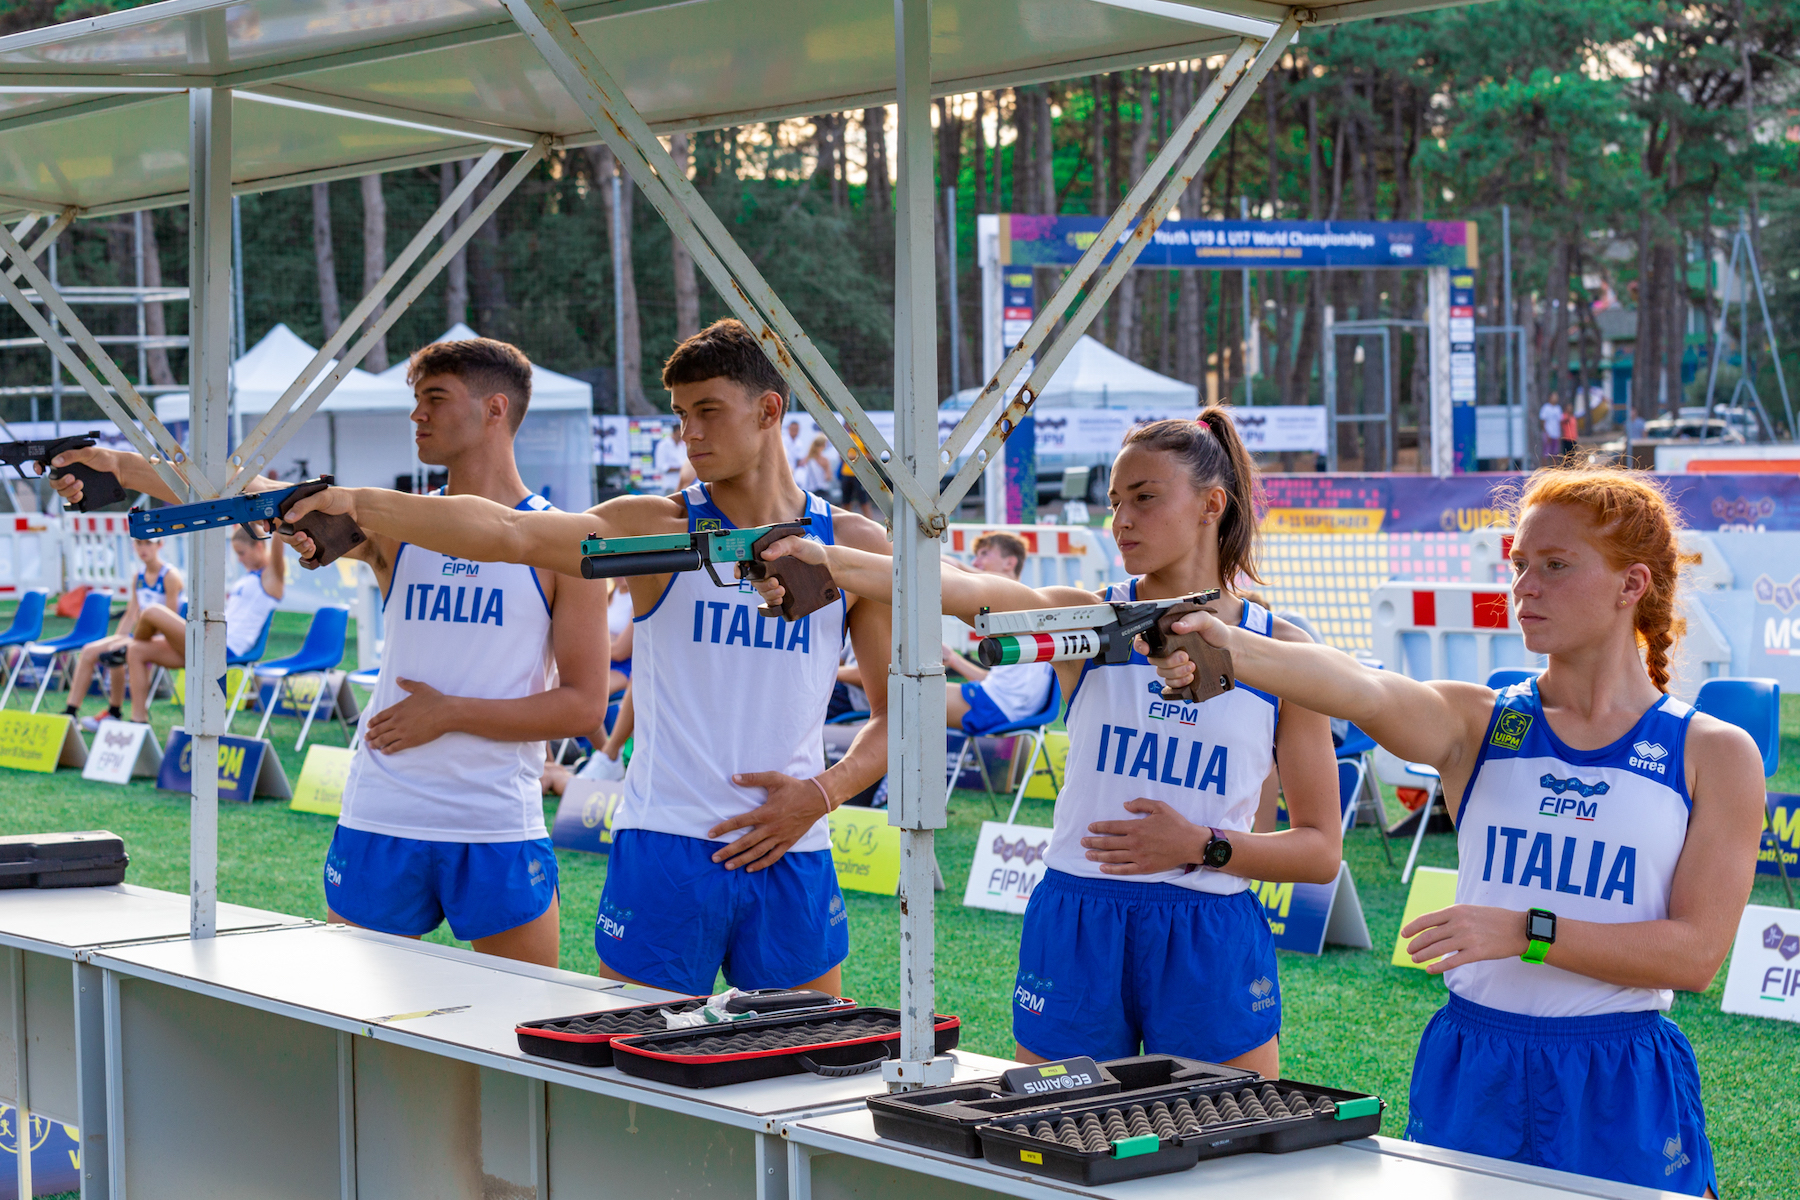 The Uipm 2022 Youth U19 & U17 World Championships kick off 4-11 September in Lignano Sabbiadoro